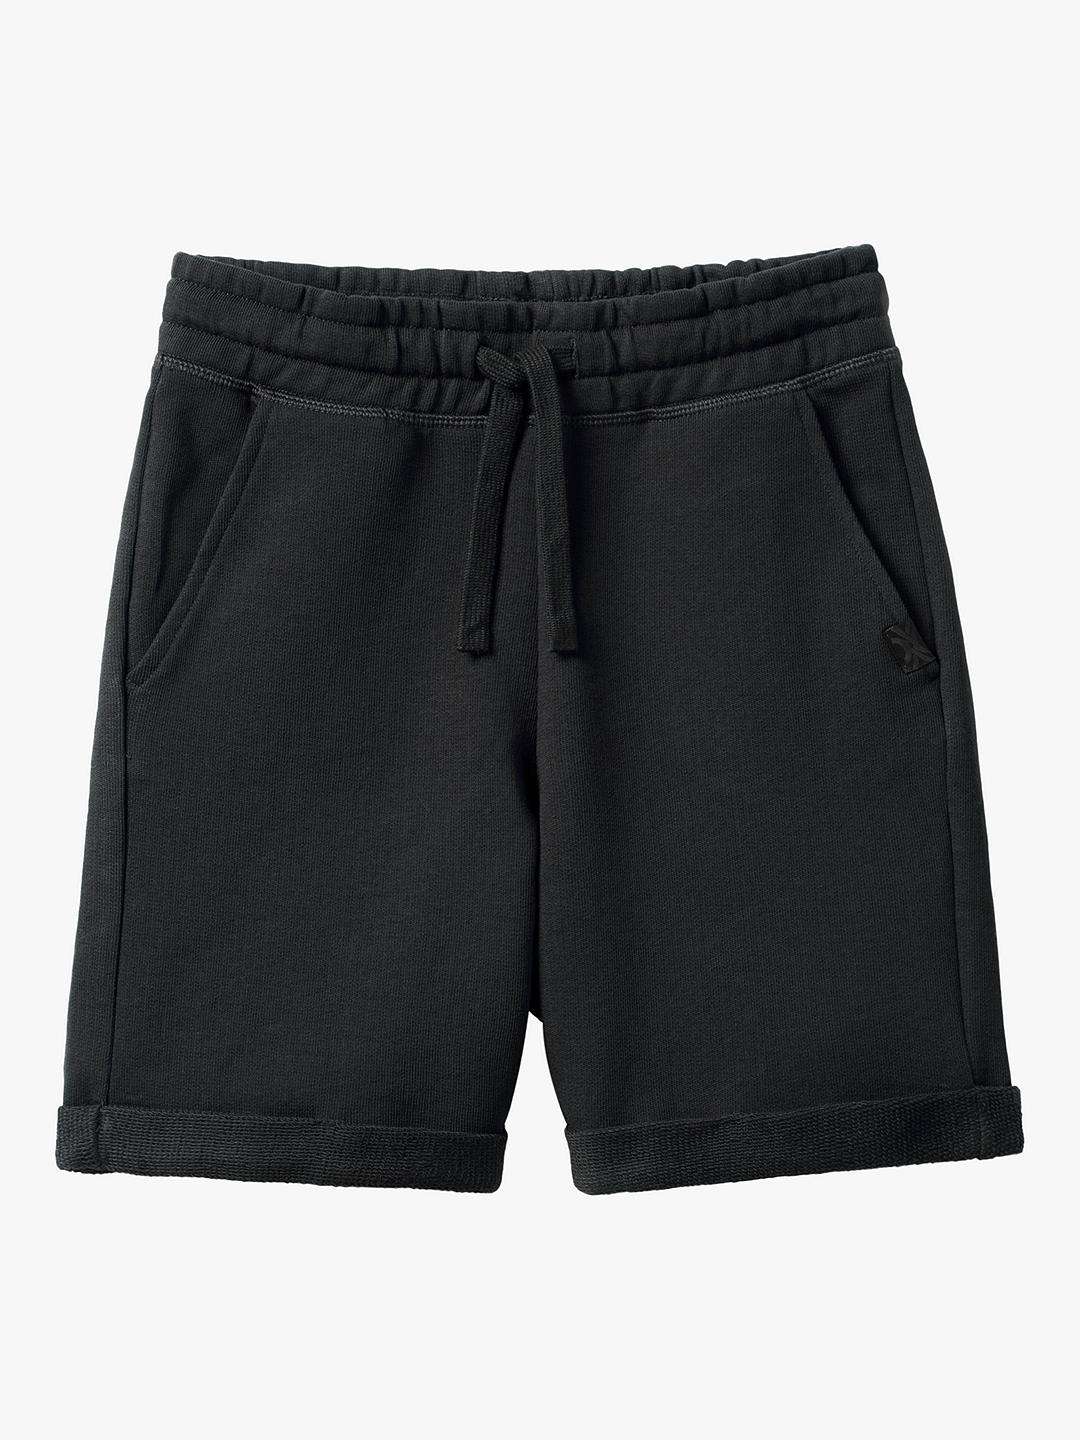 Benetton Kids' Cotton Sweat Bermuda Shorts, Black